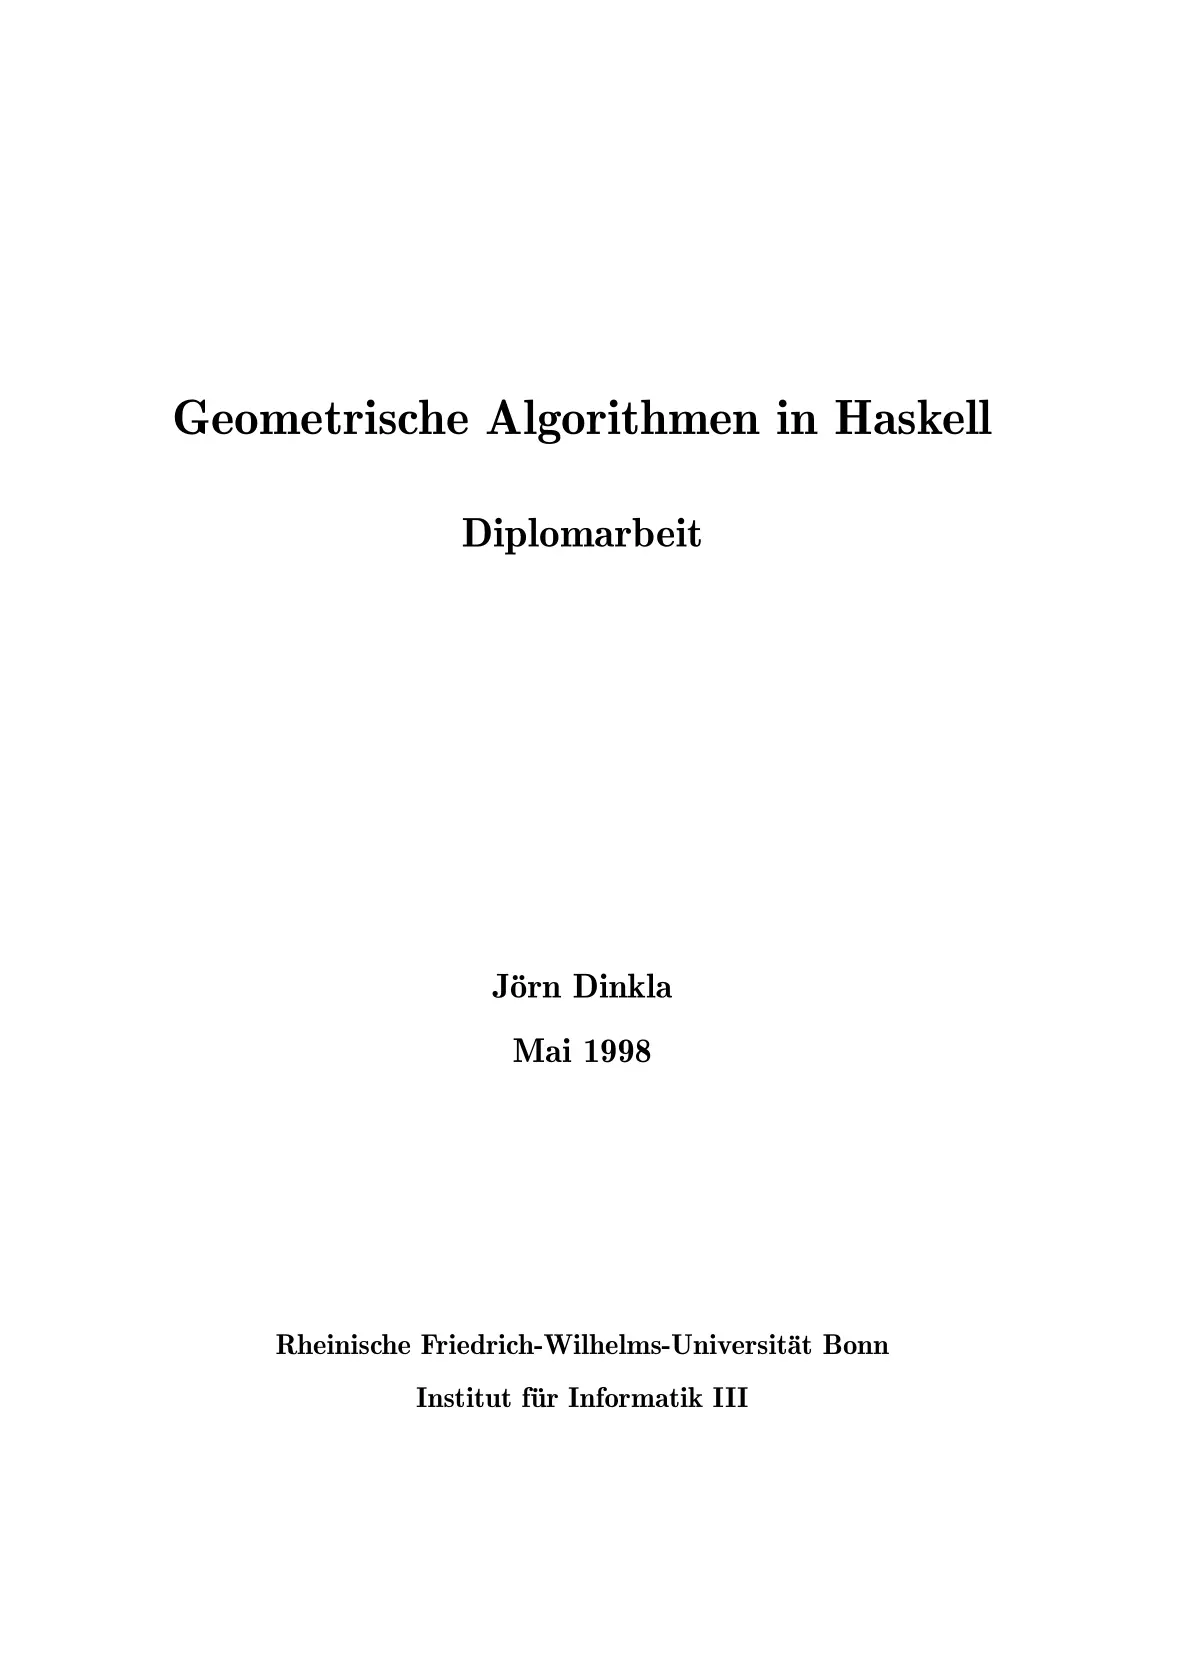 Diplomarbeit 'Geometrische Algorithmen in Haskell'